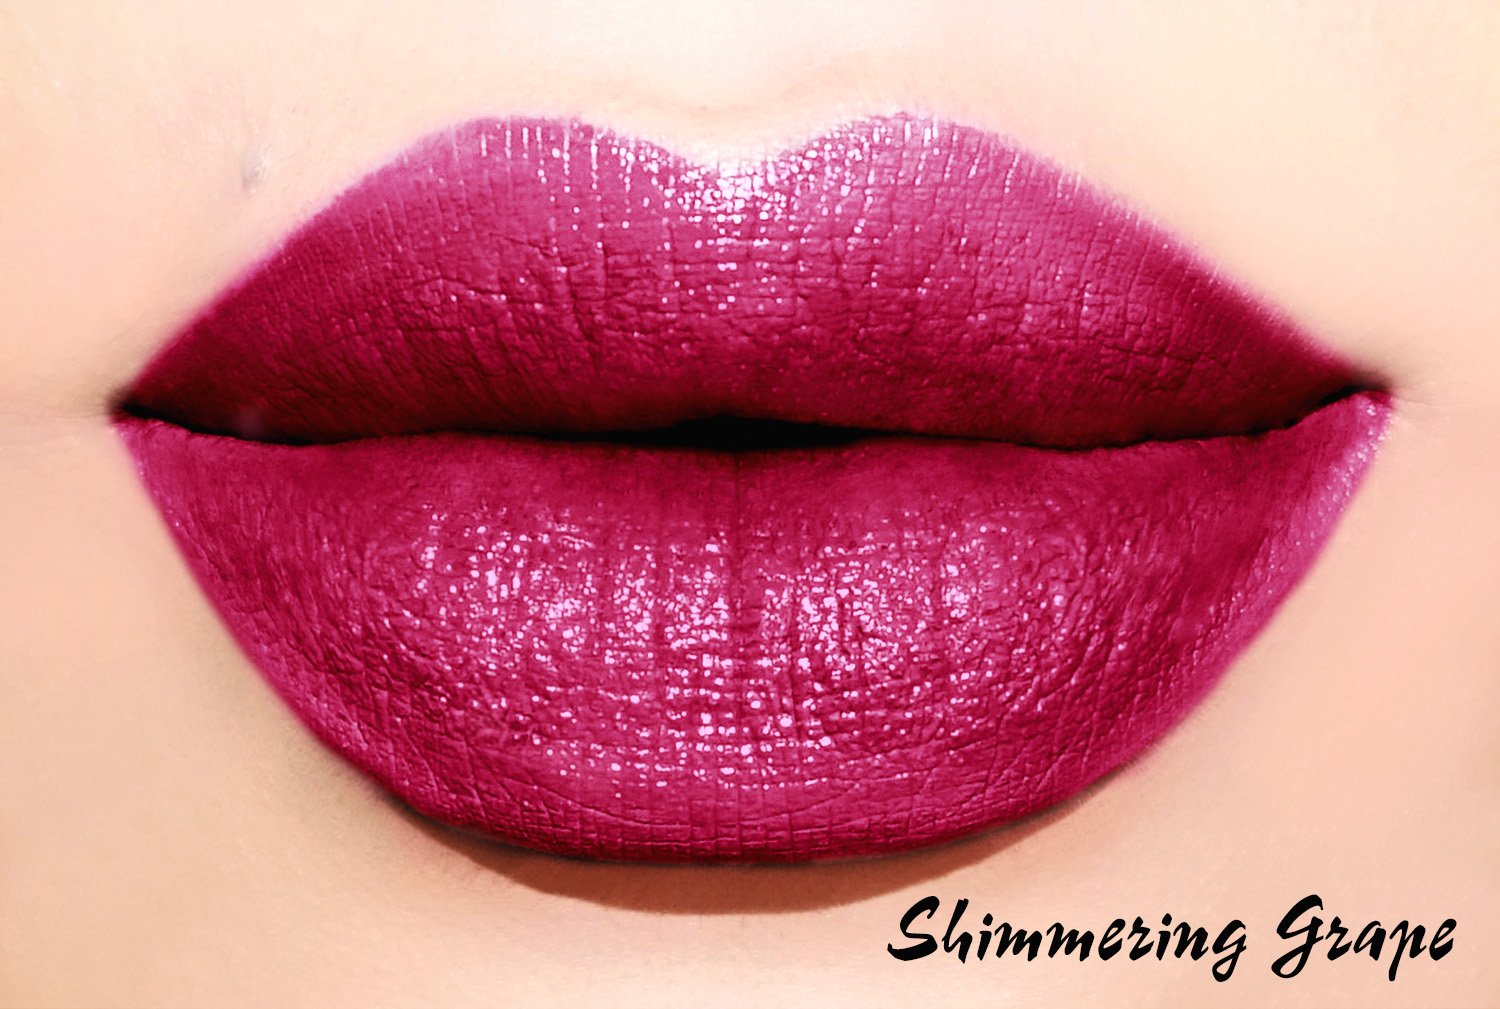 Berry Lipsticks